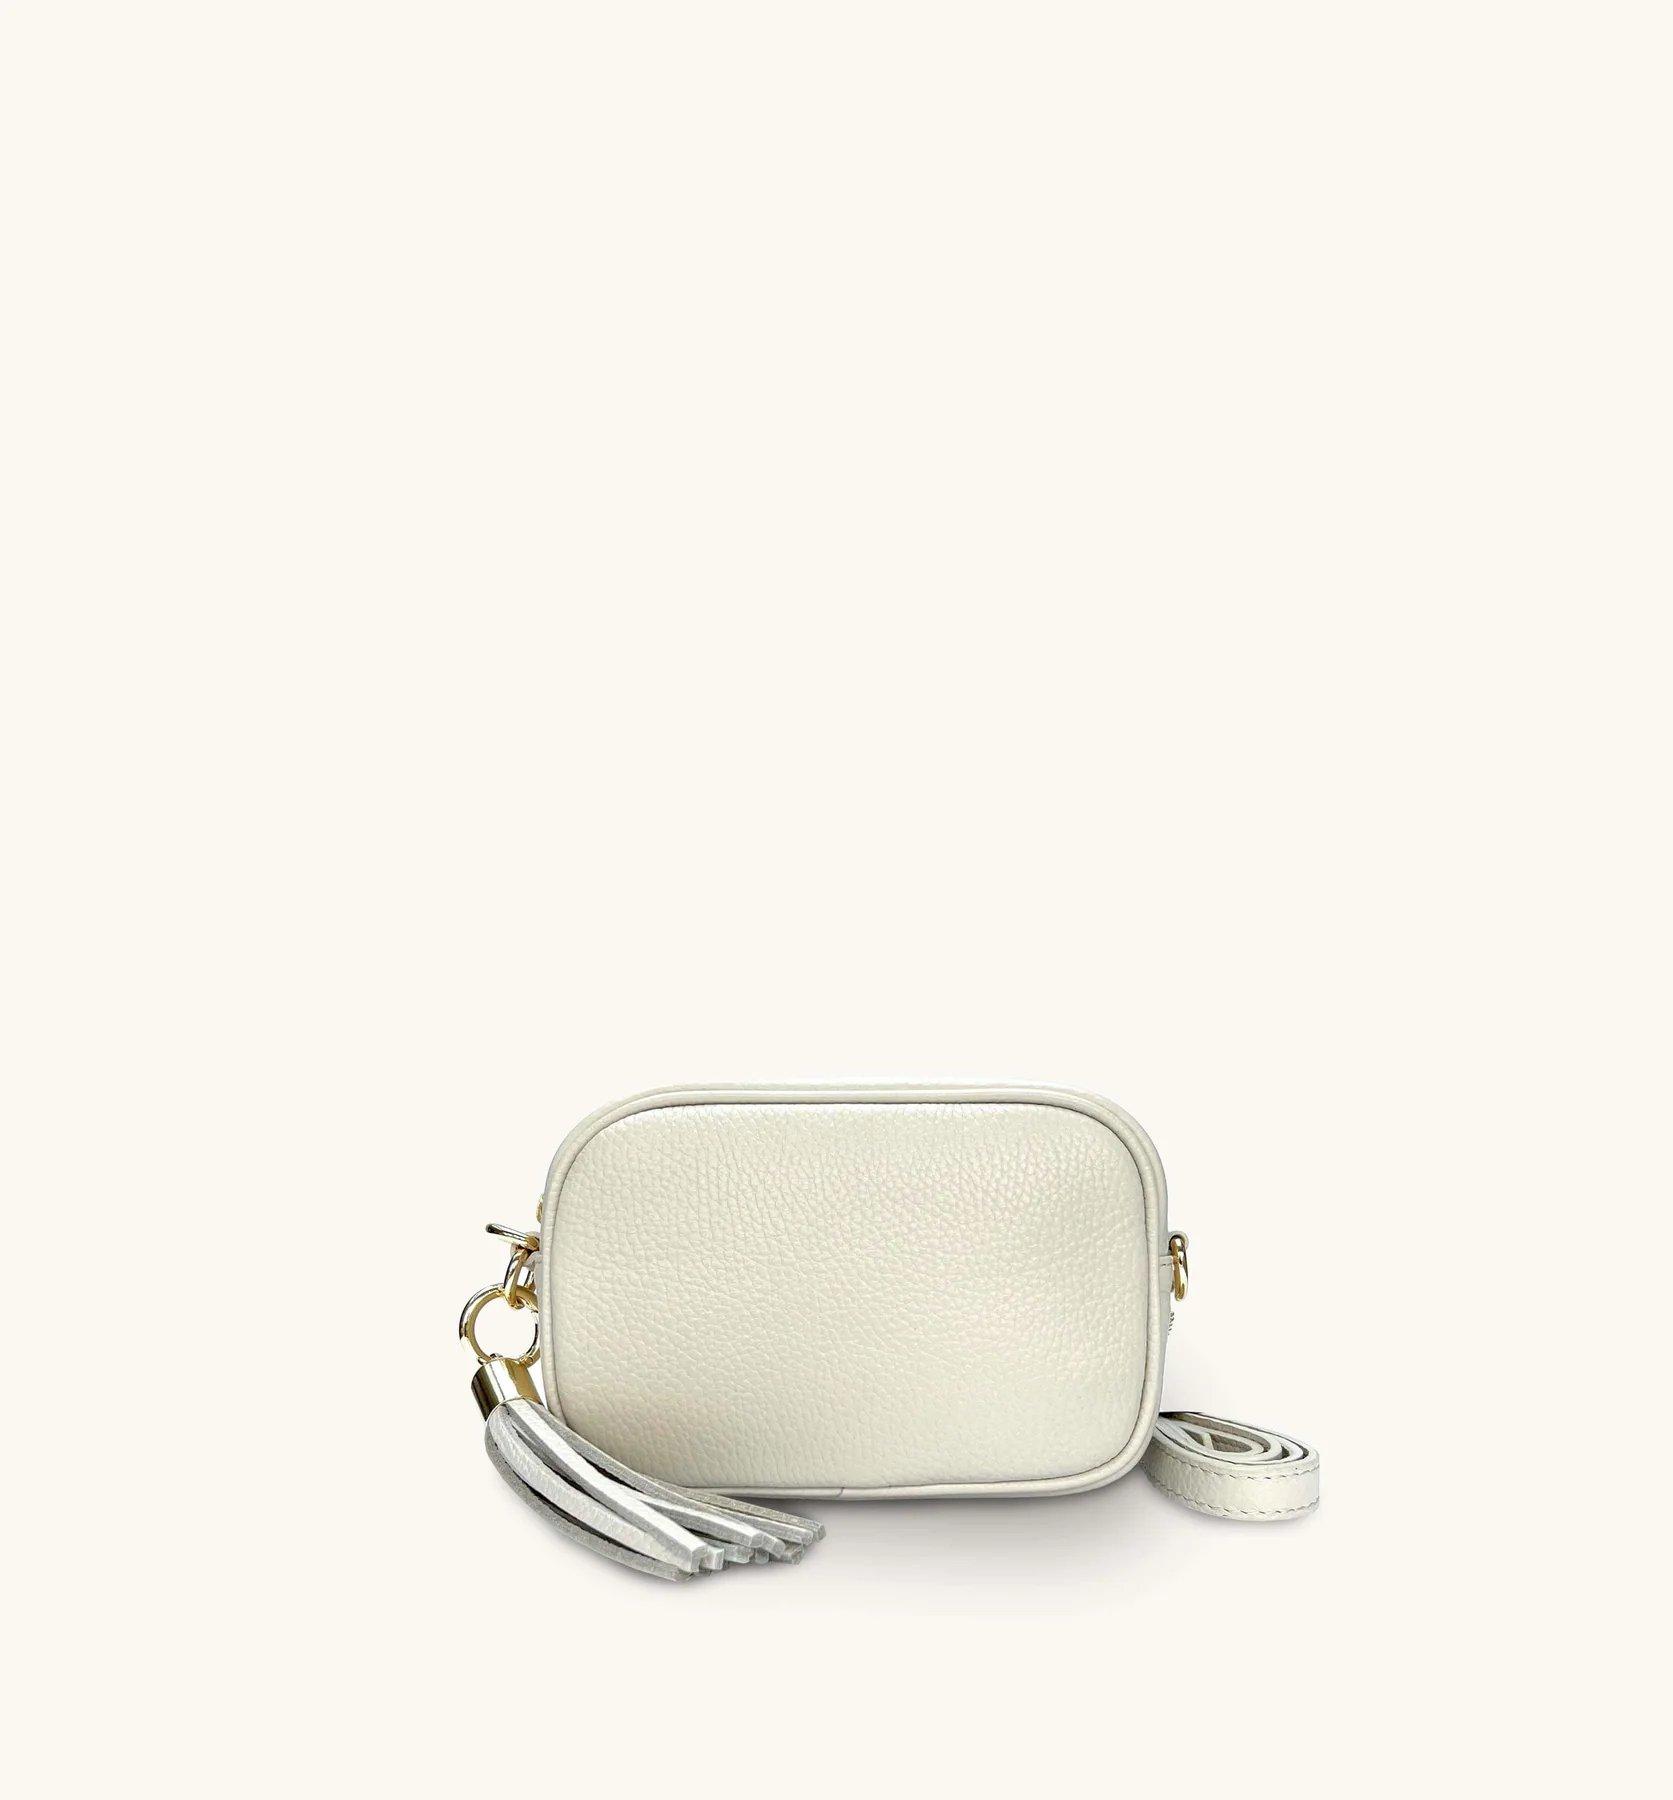 Кожаная сумка для телефона Mini с кисточками и камнями Apatchy London, бежевый цена и фото